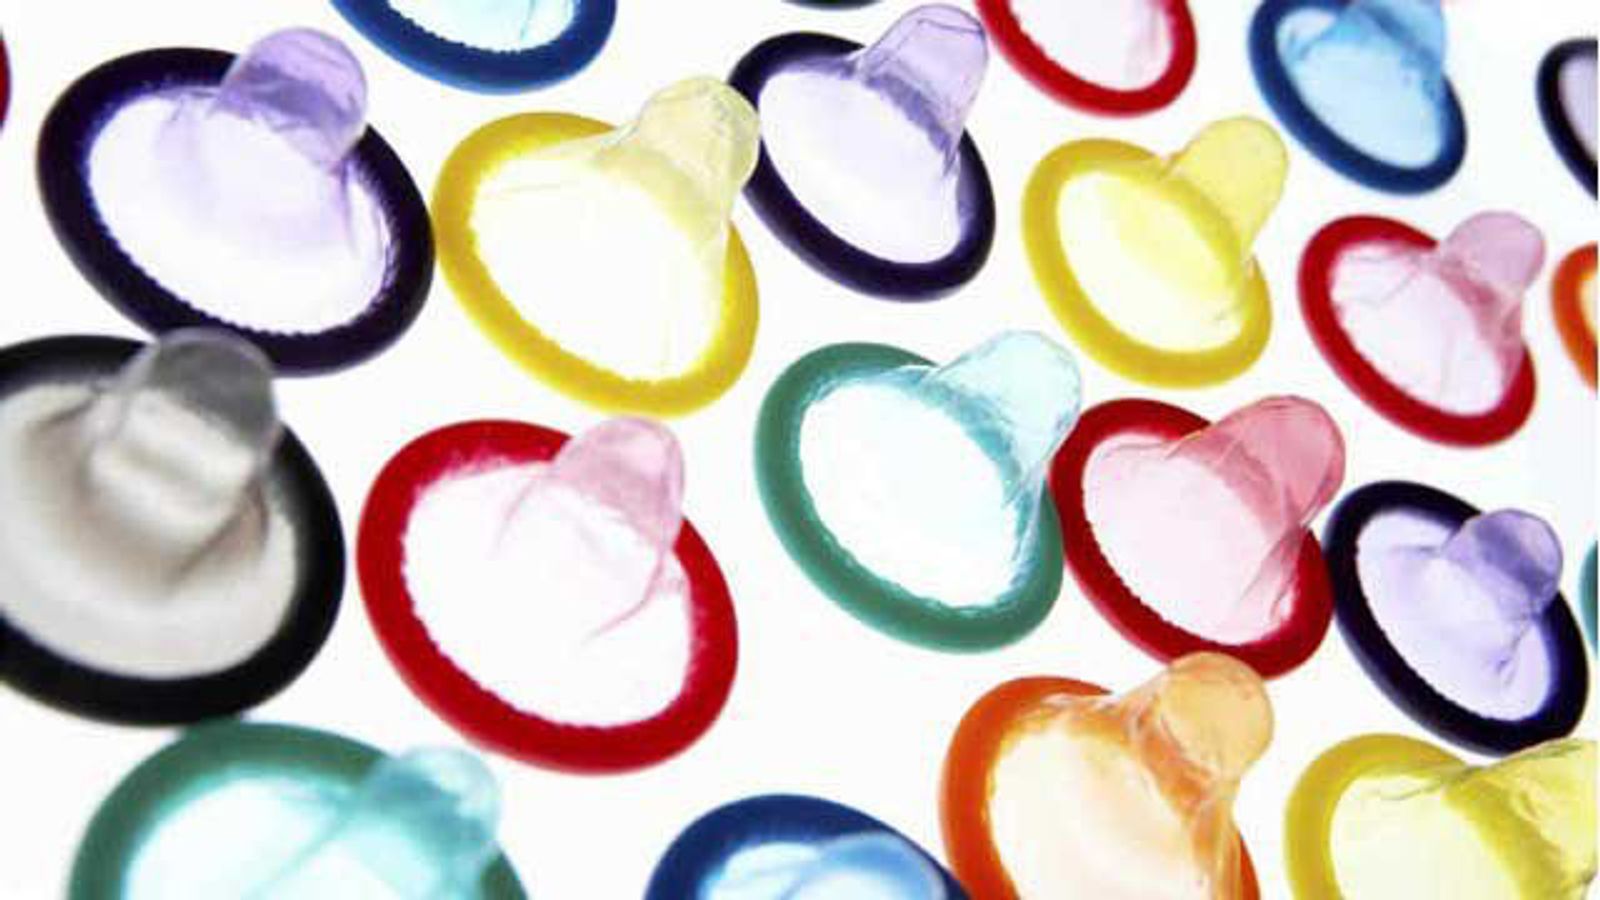 Paradise Marketing Warns of Counterfeit Condoms Flooding Market